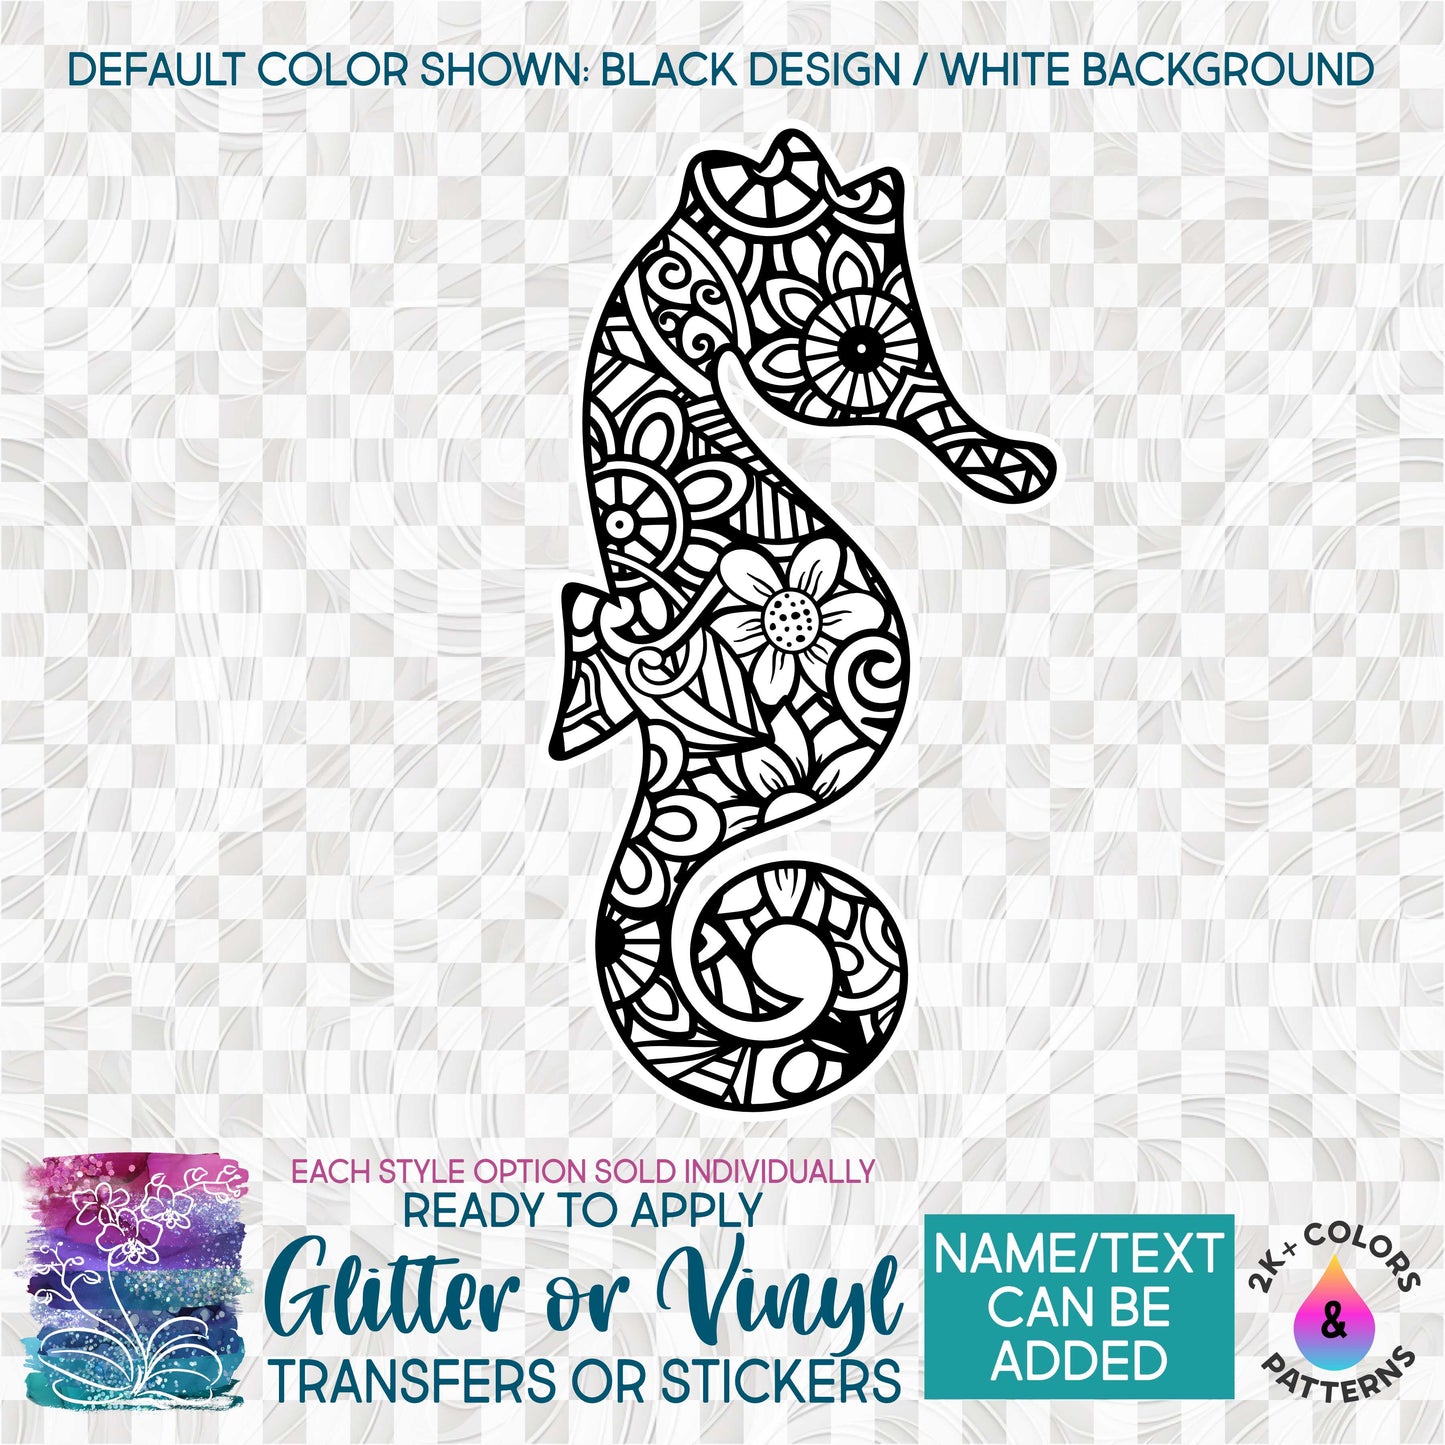 (s011-O4) Seahorse Zentangle Mandala Floral Doodle Glitter or Vinyl Iron-On Transfer or Sticker